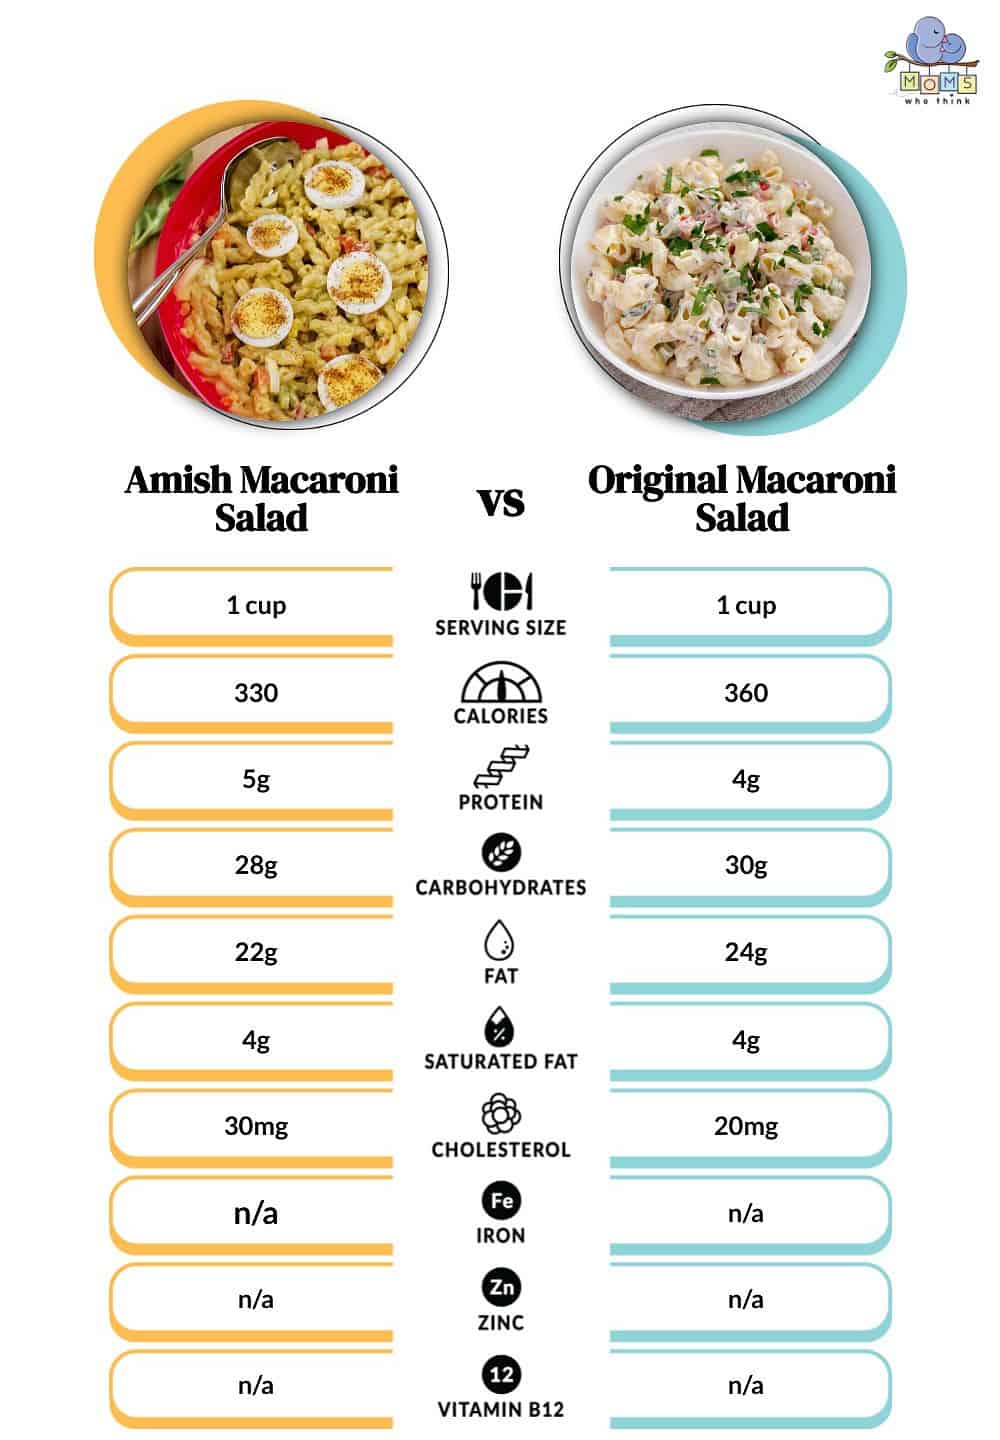 Amish Macaroni Salad vs Original Macaroni Salad Nutritional Facts